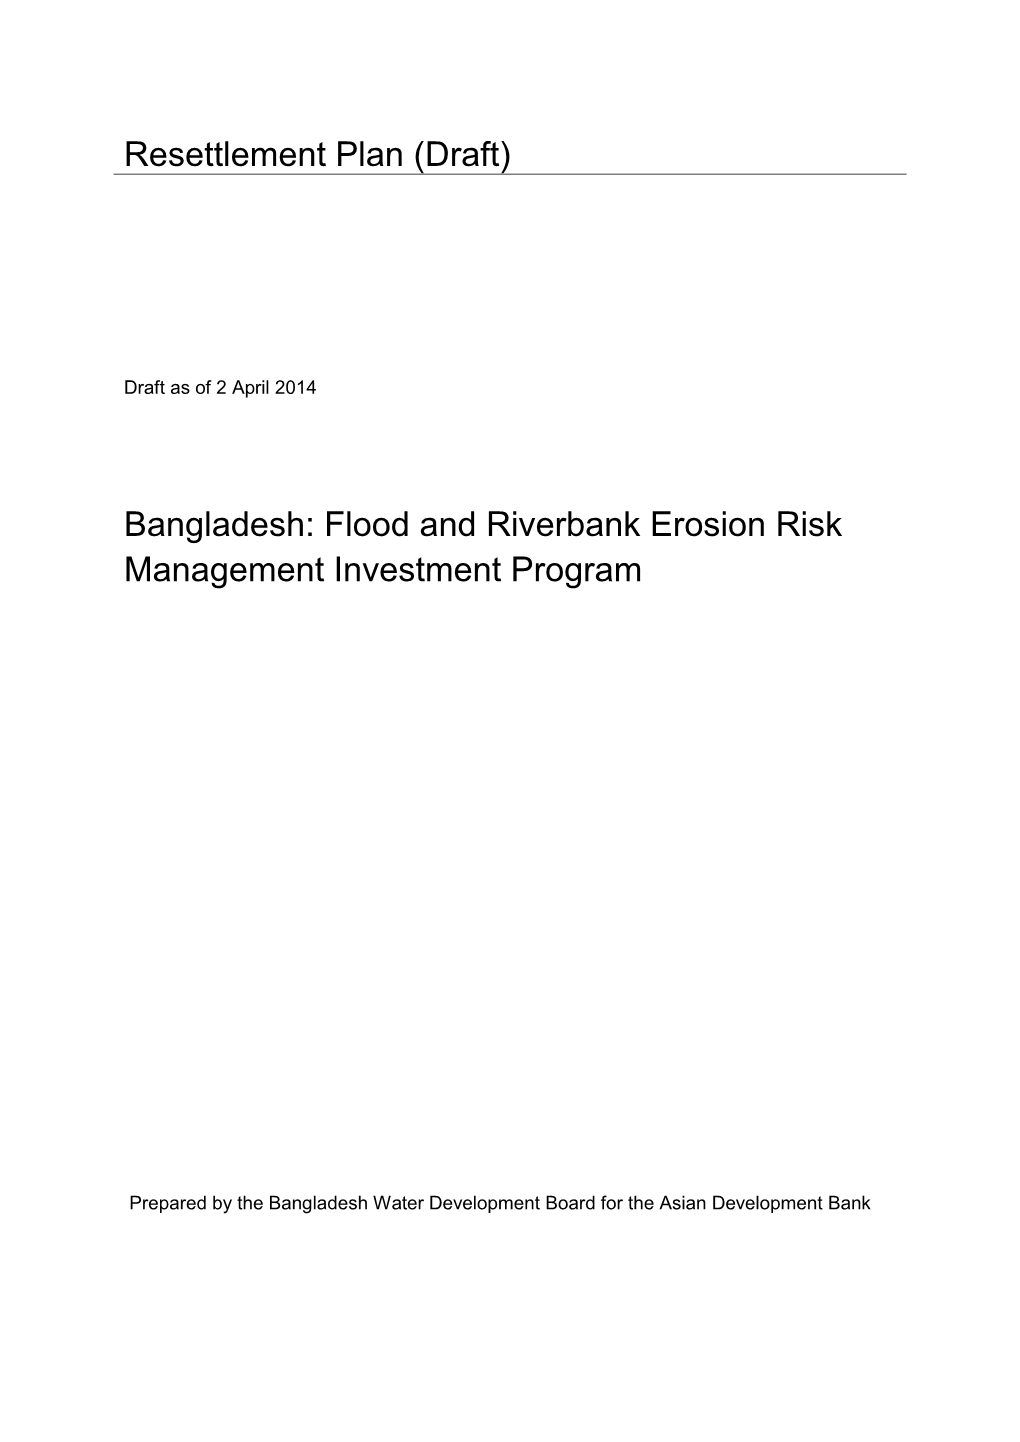 Flood and Riverbank Erosion Risk Management Investment Program